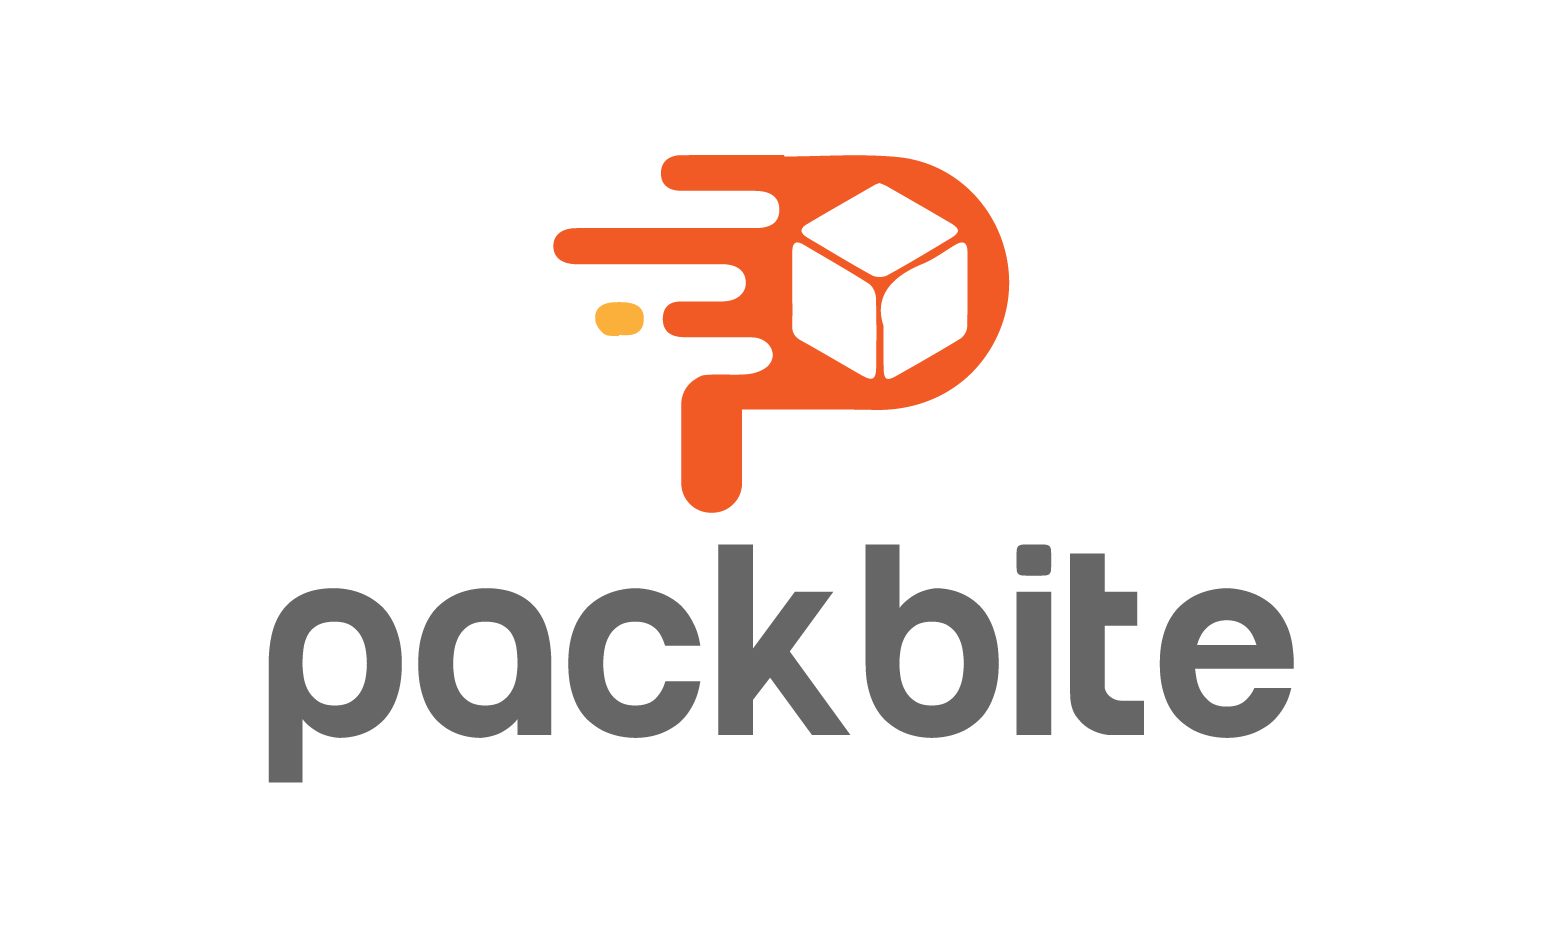 PackBite.com - Creative brandable domain for sale